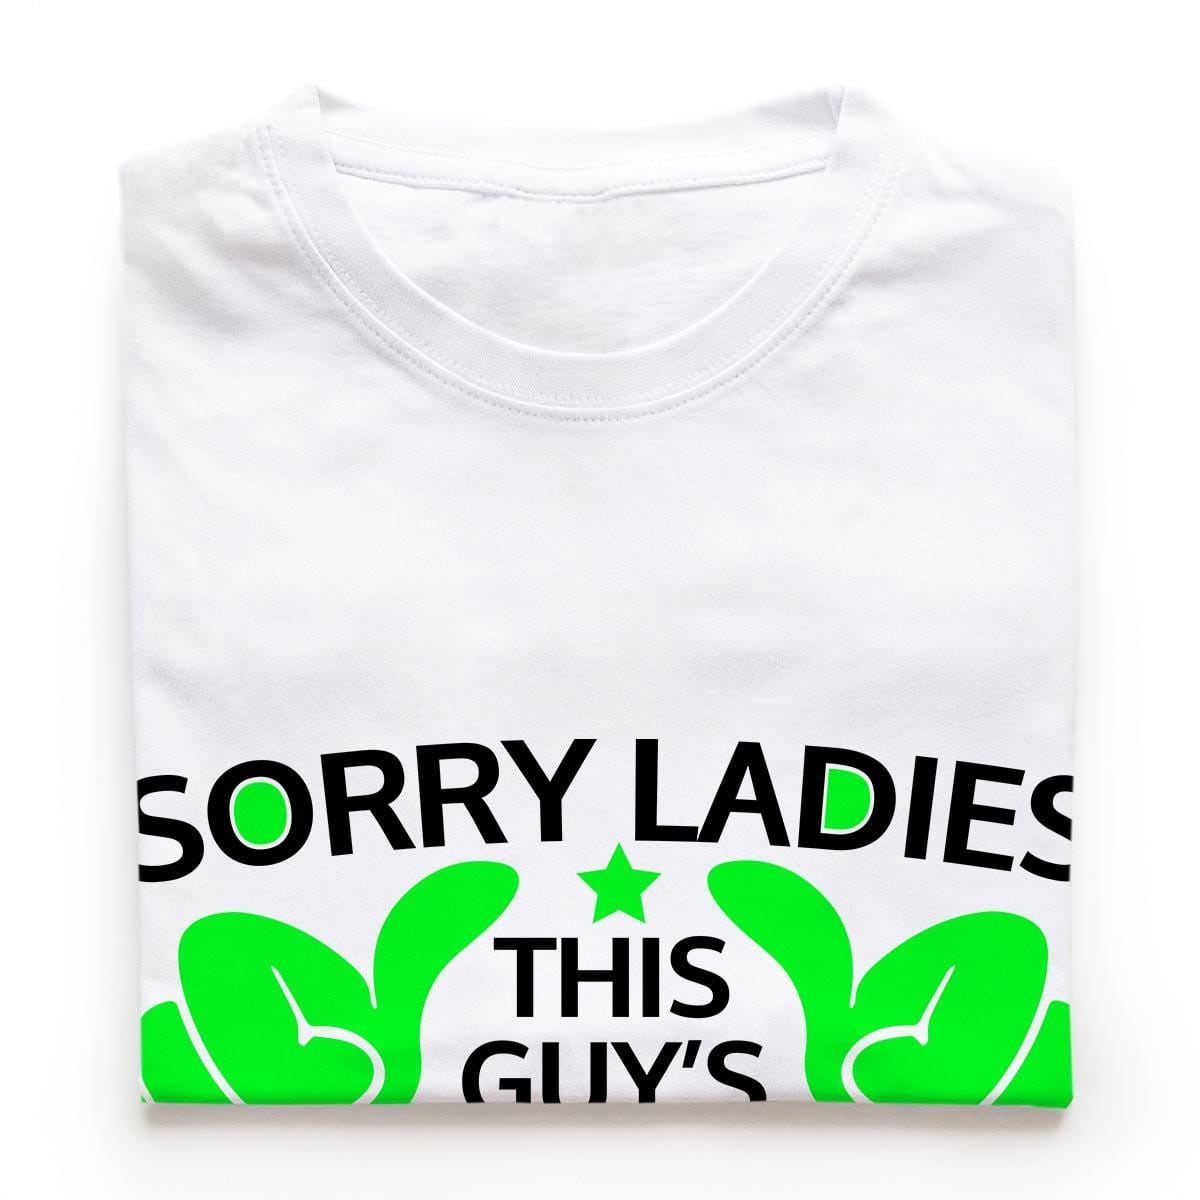 Tricouri petrecerea burlacilor - Sorry ladies 3